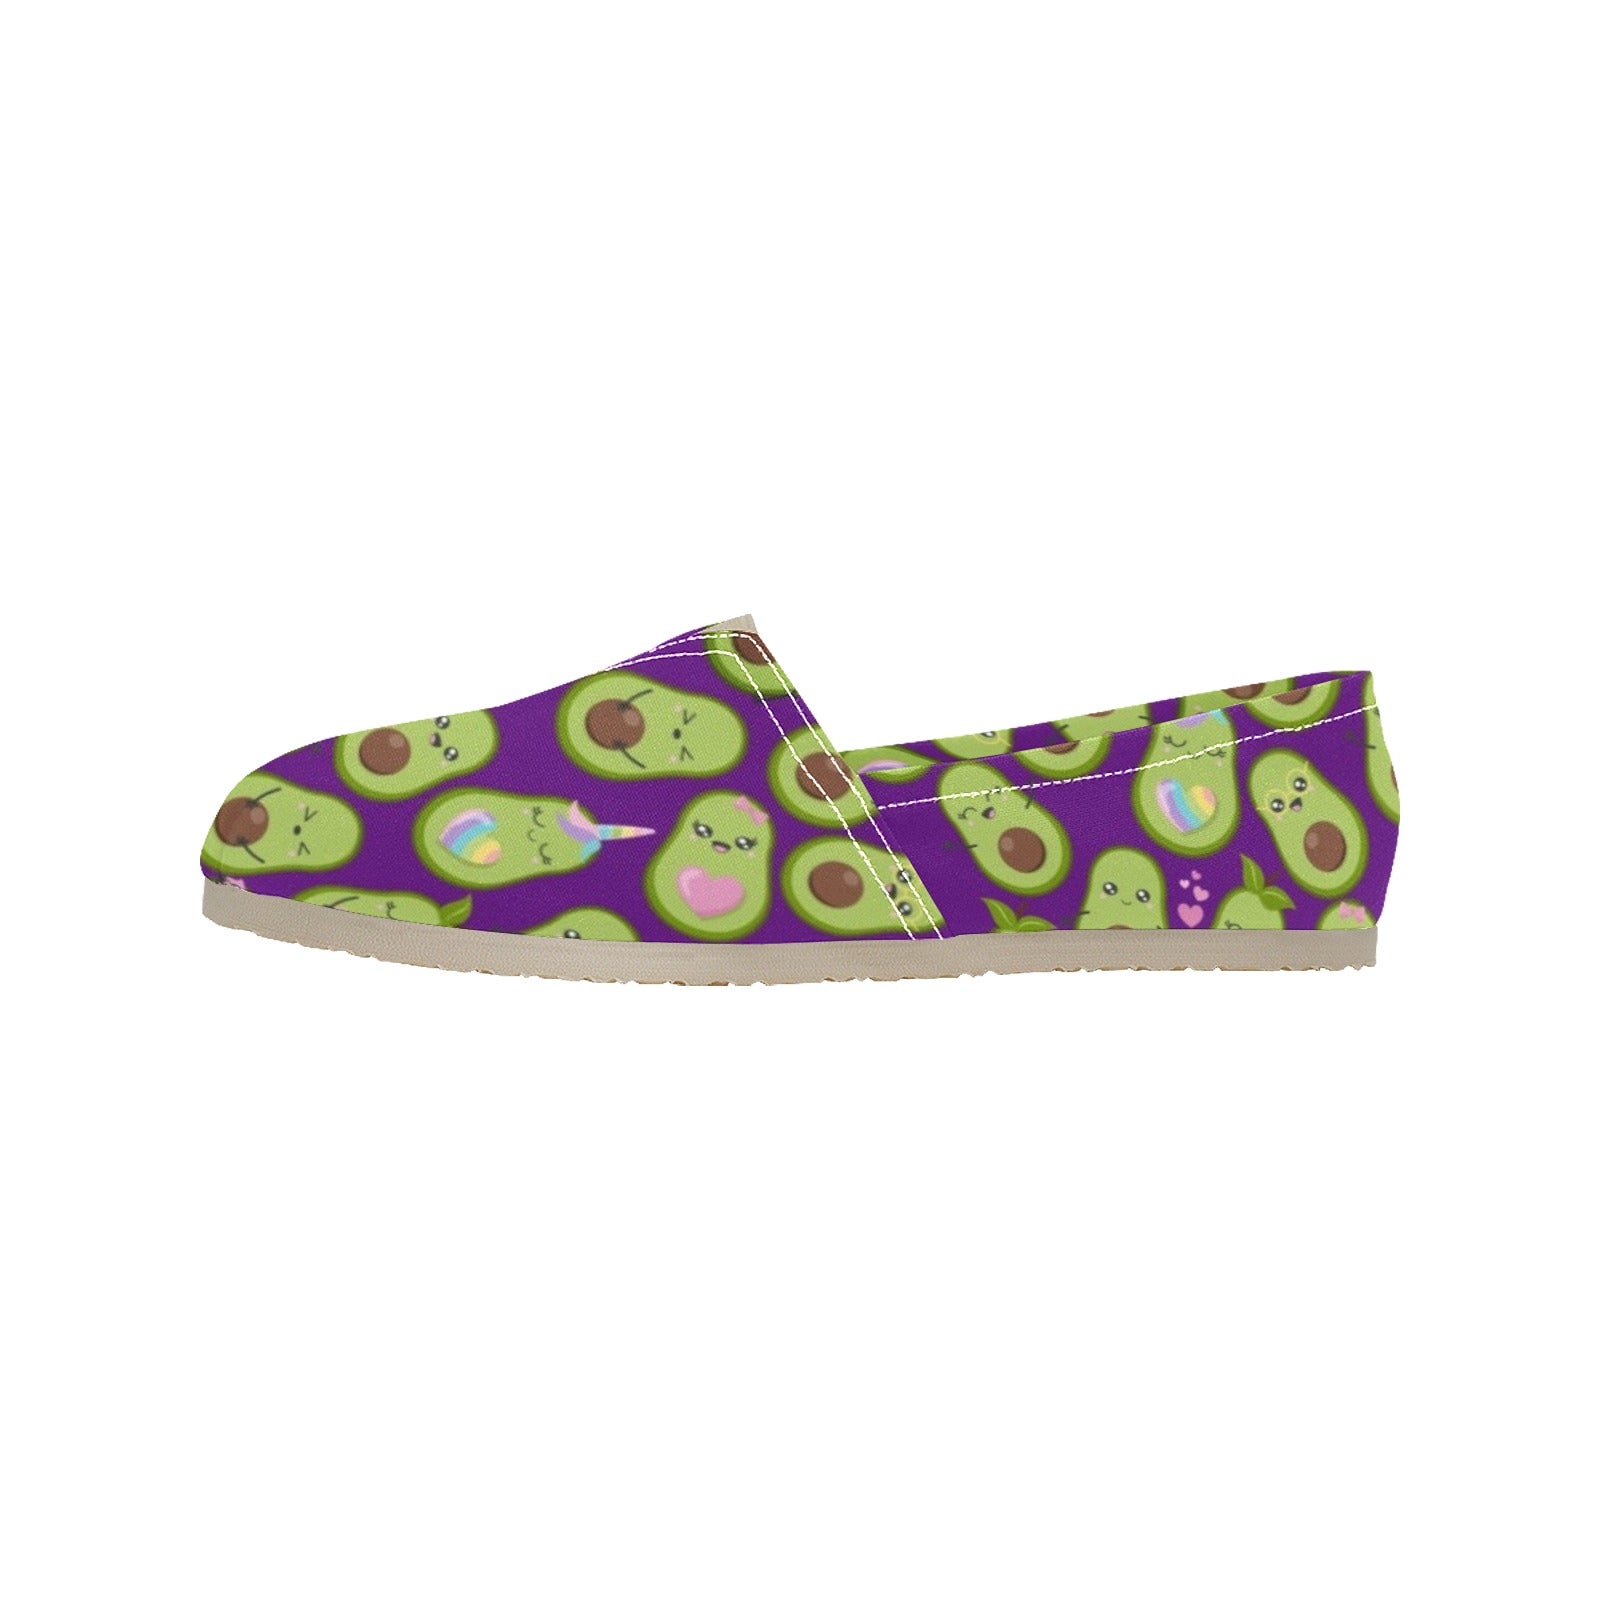 Avocado - Casual Canvas Slip-on Shoes